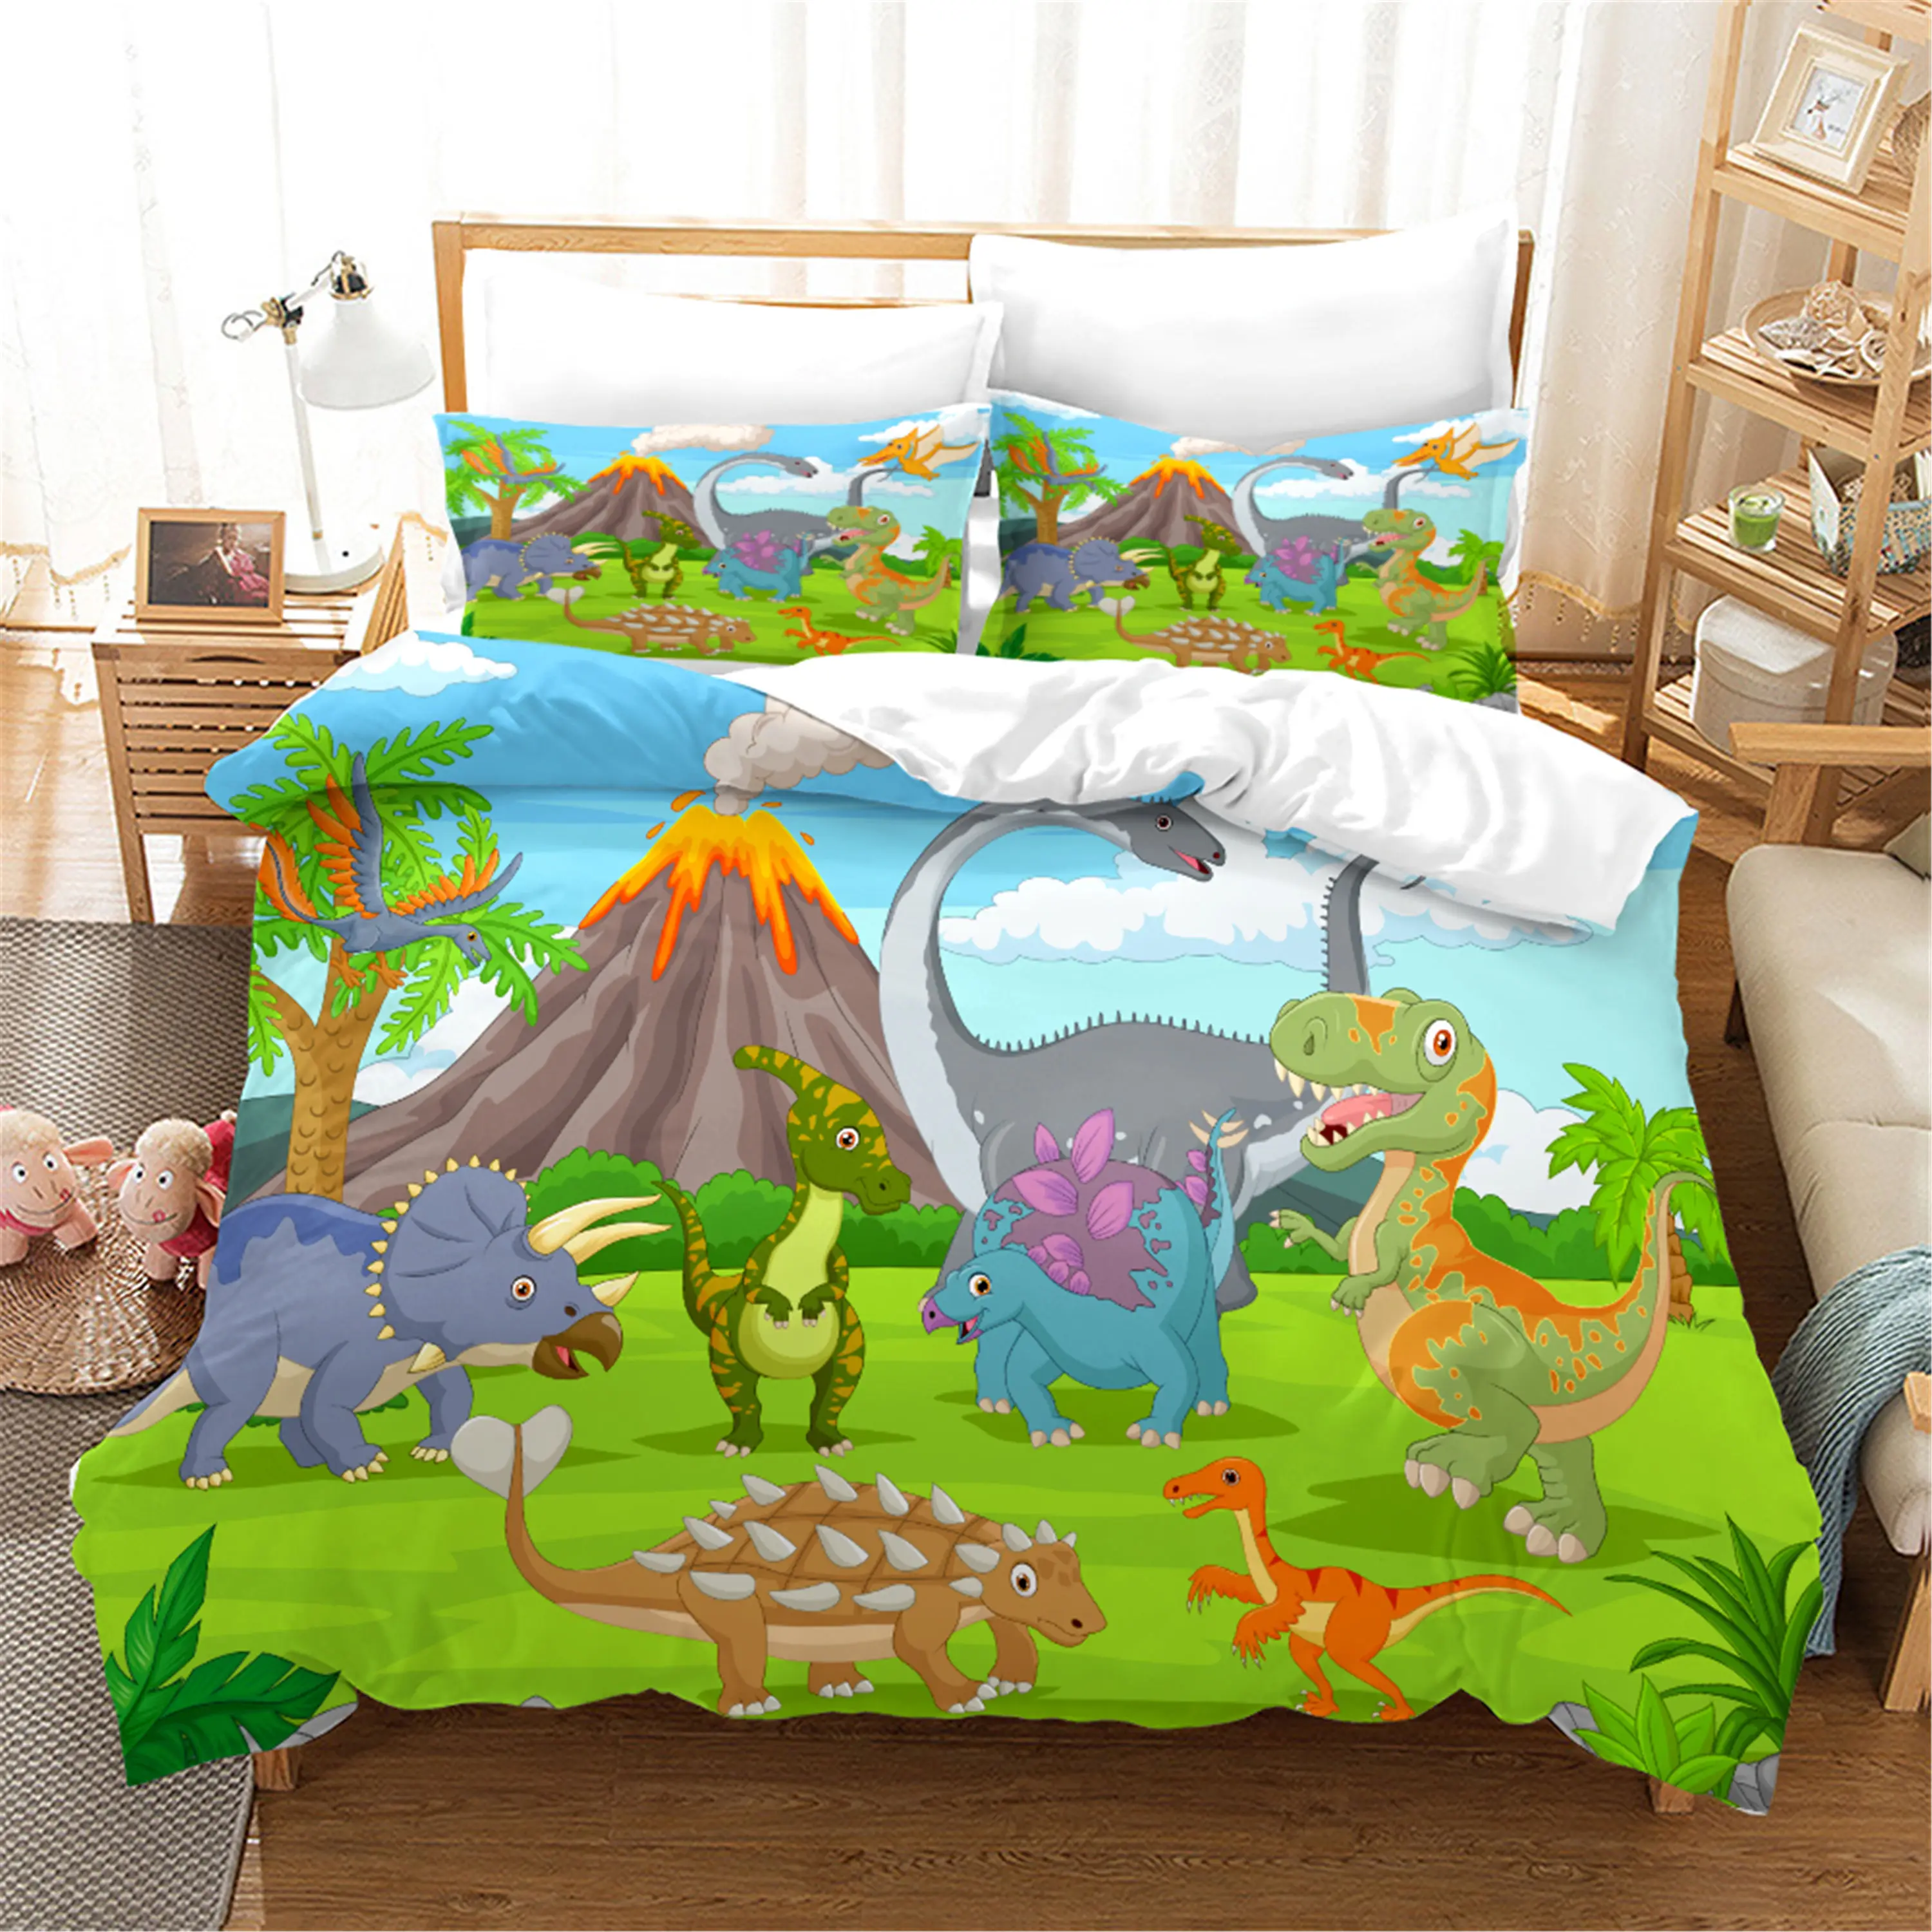 

Printed Duvet Cover Bedclothes 2/3pcs Home Textiles Luxury High Quality Bedspread Queen Size Cartoon Cute Bedding Set Dinosaur